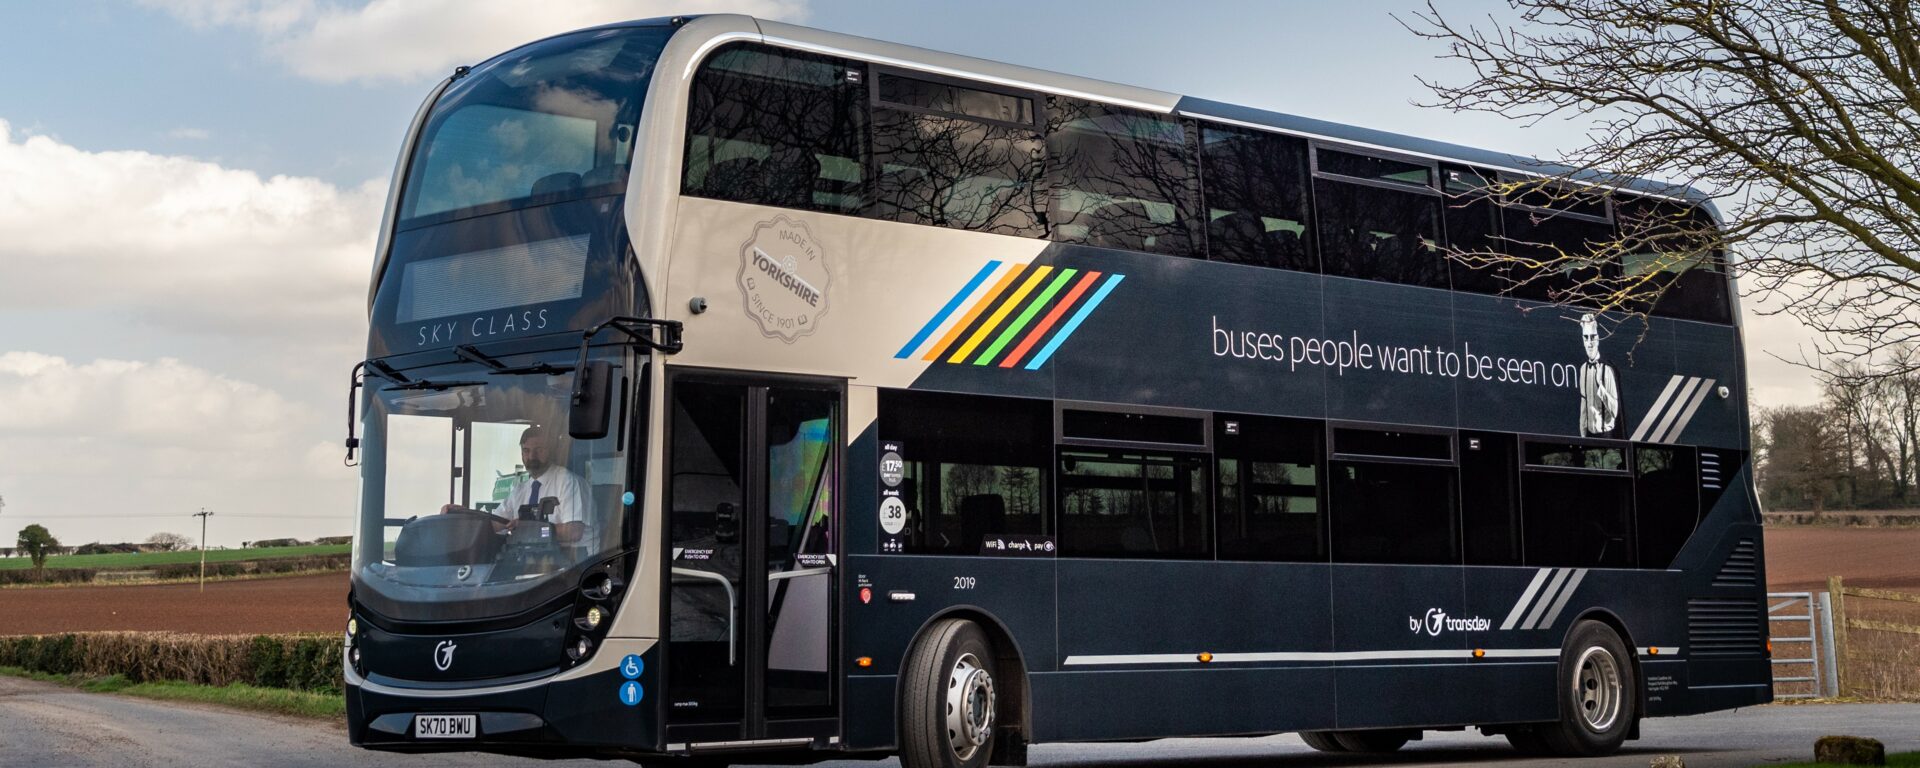 Transdev UK Sky Class black double decker bus